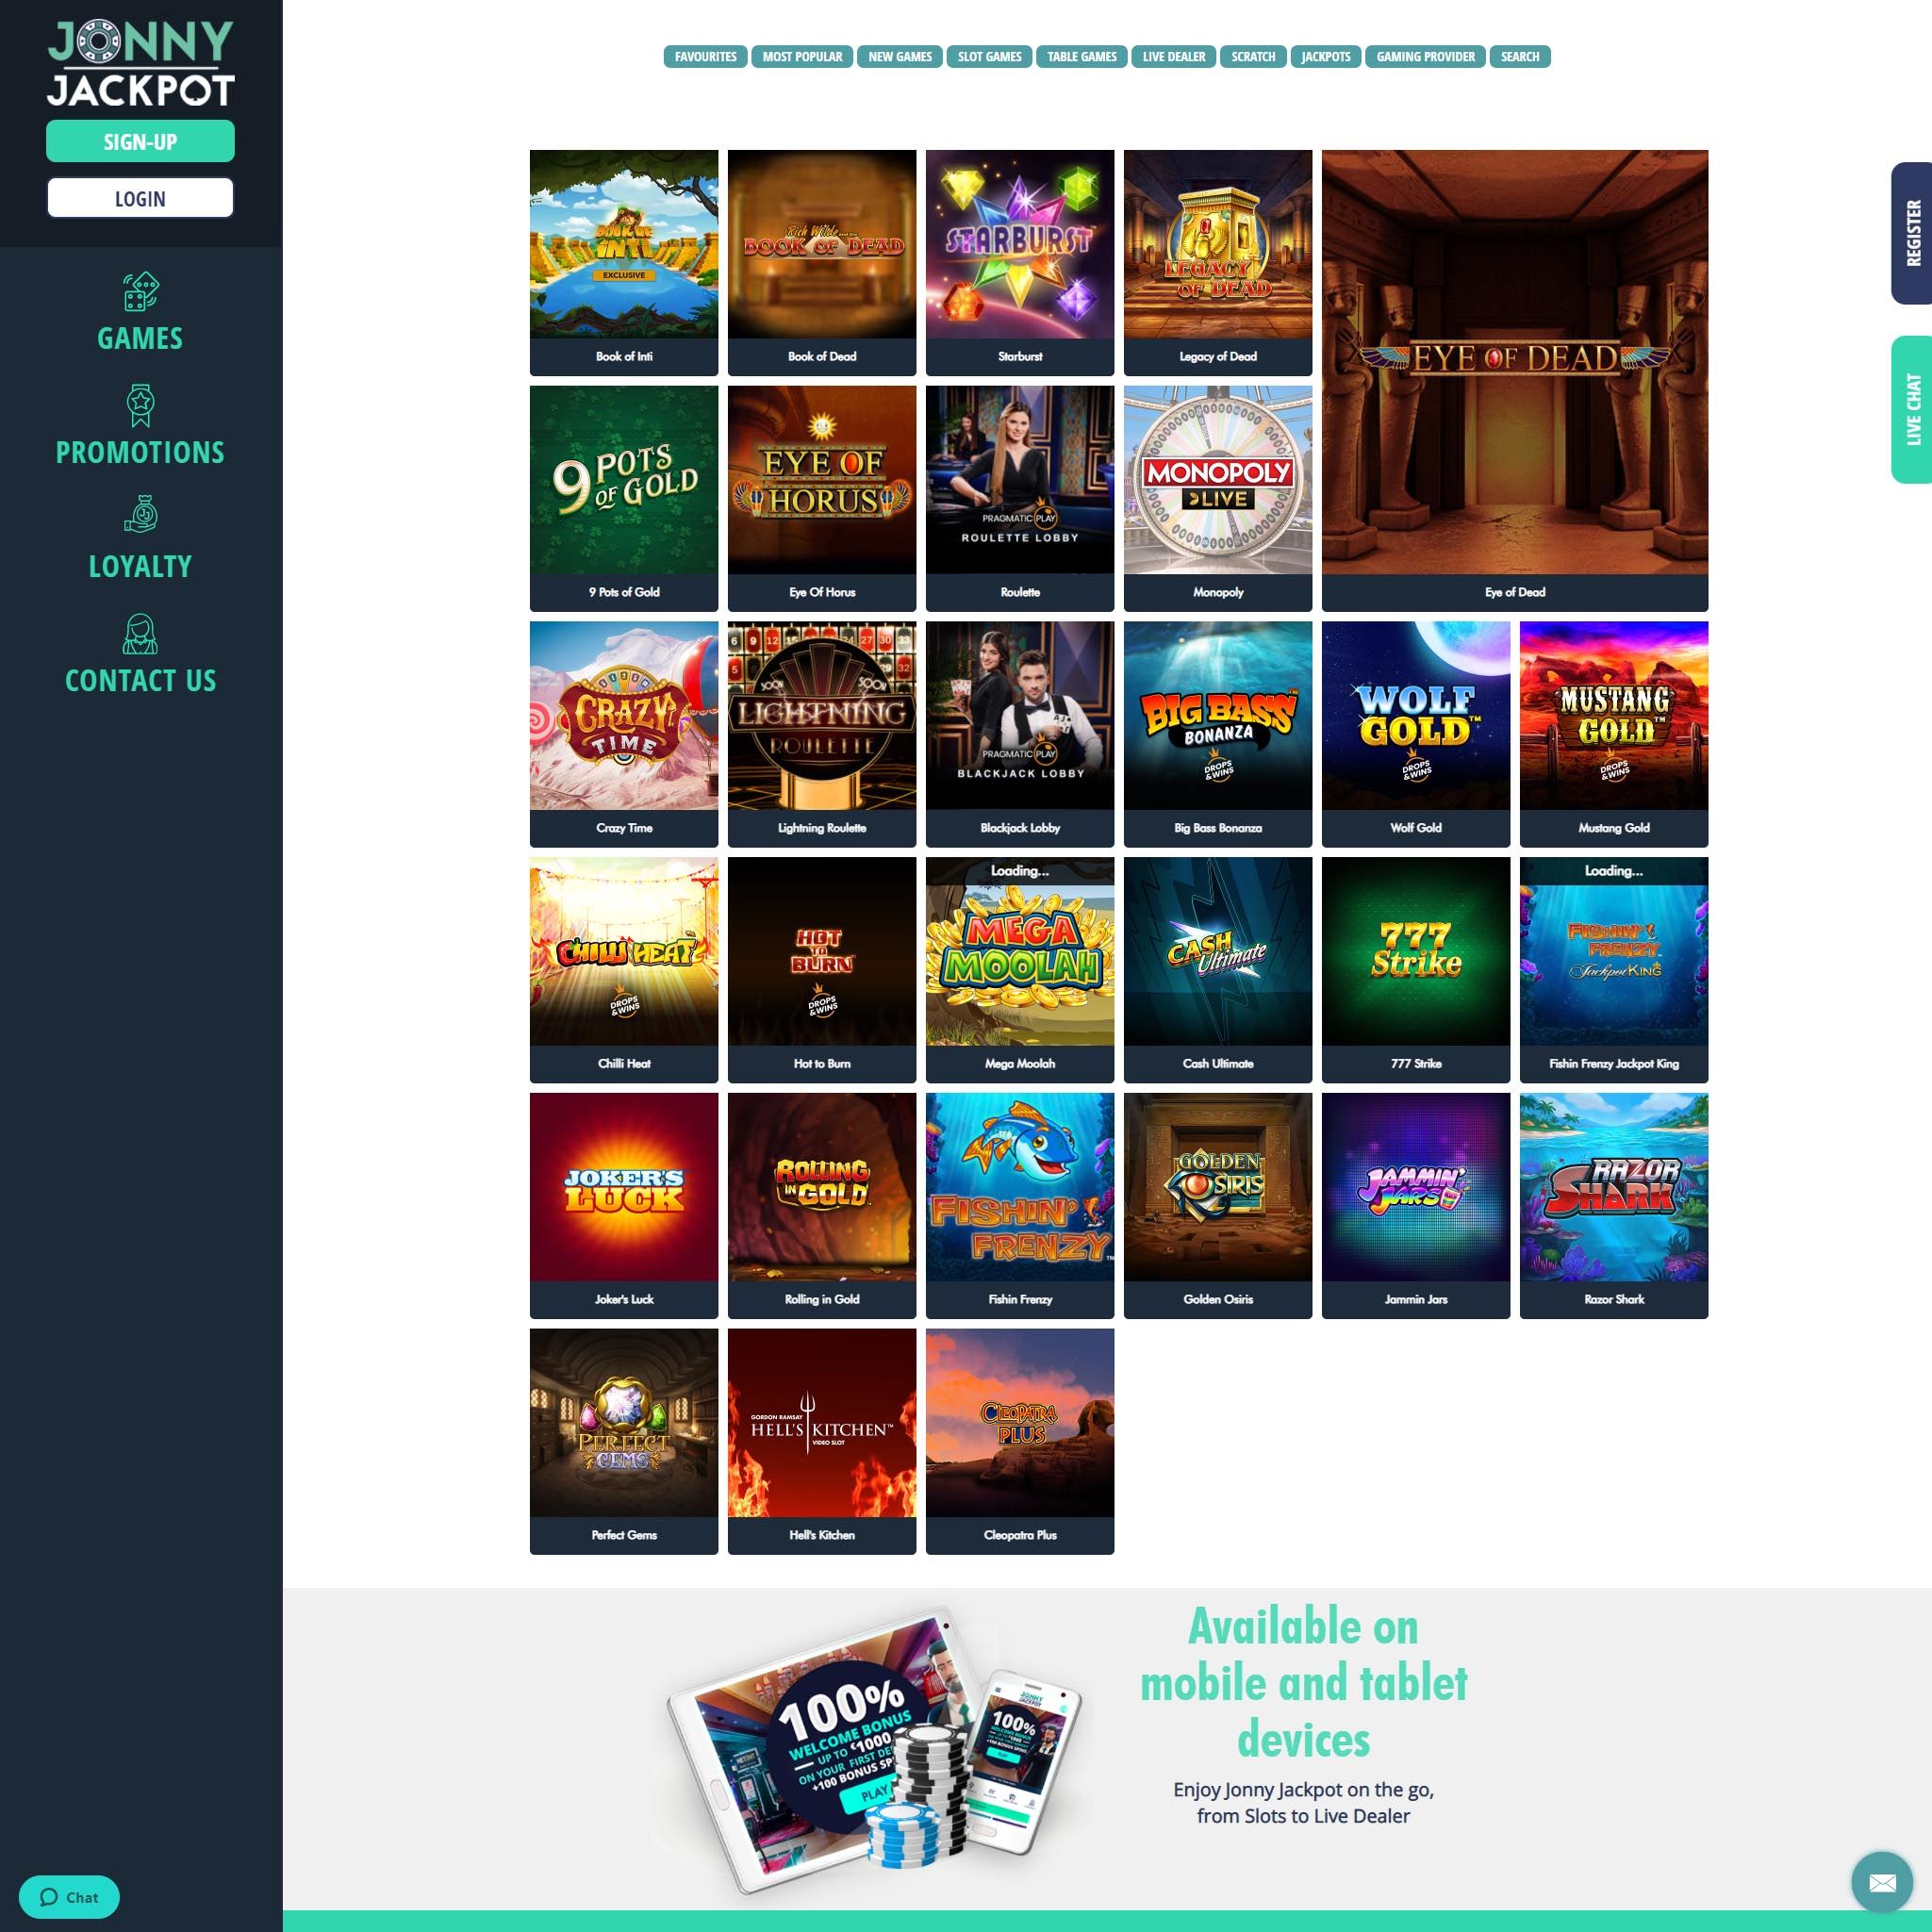 Jonny Jackpot Casino full games catalogue